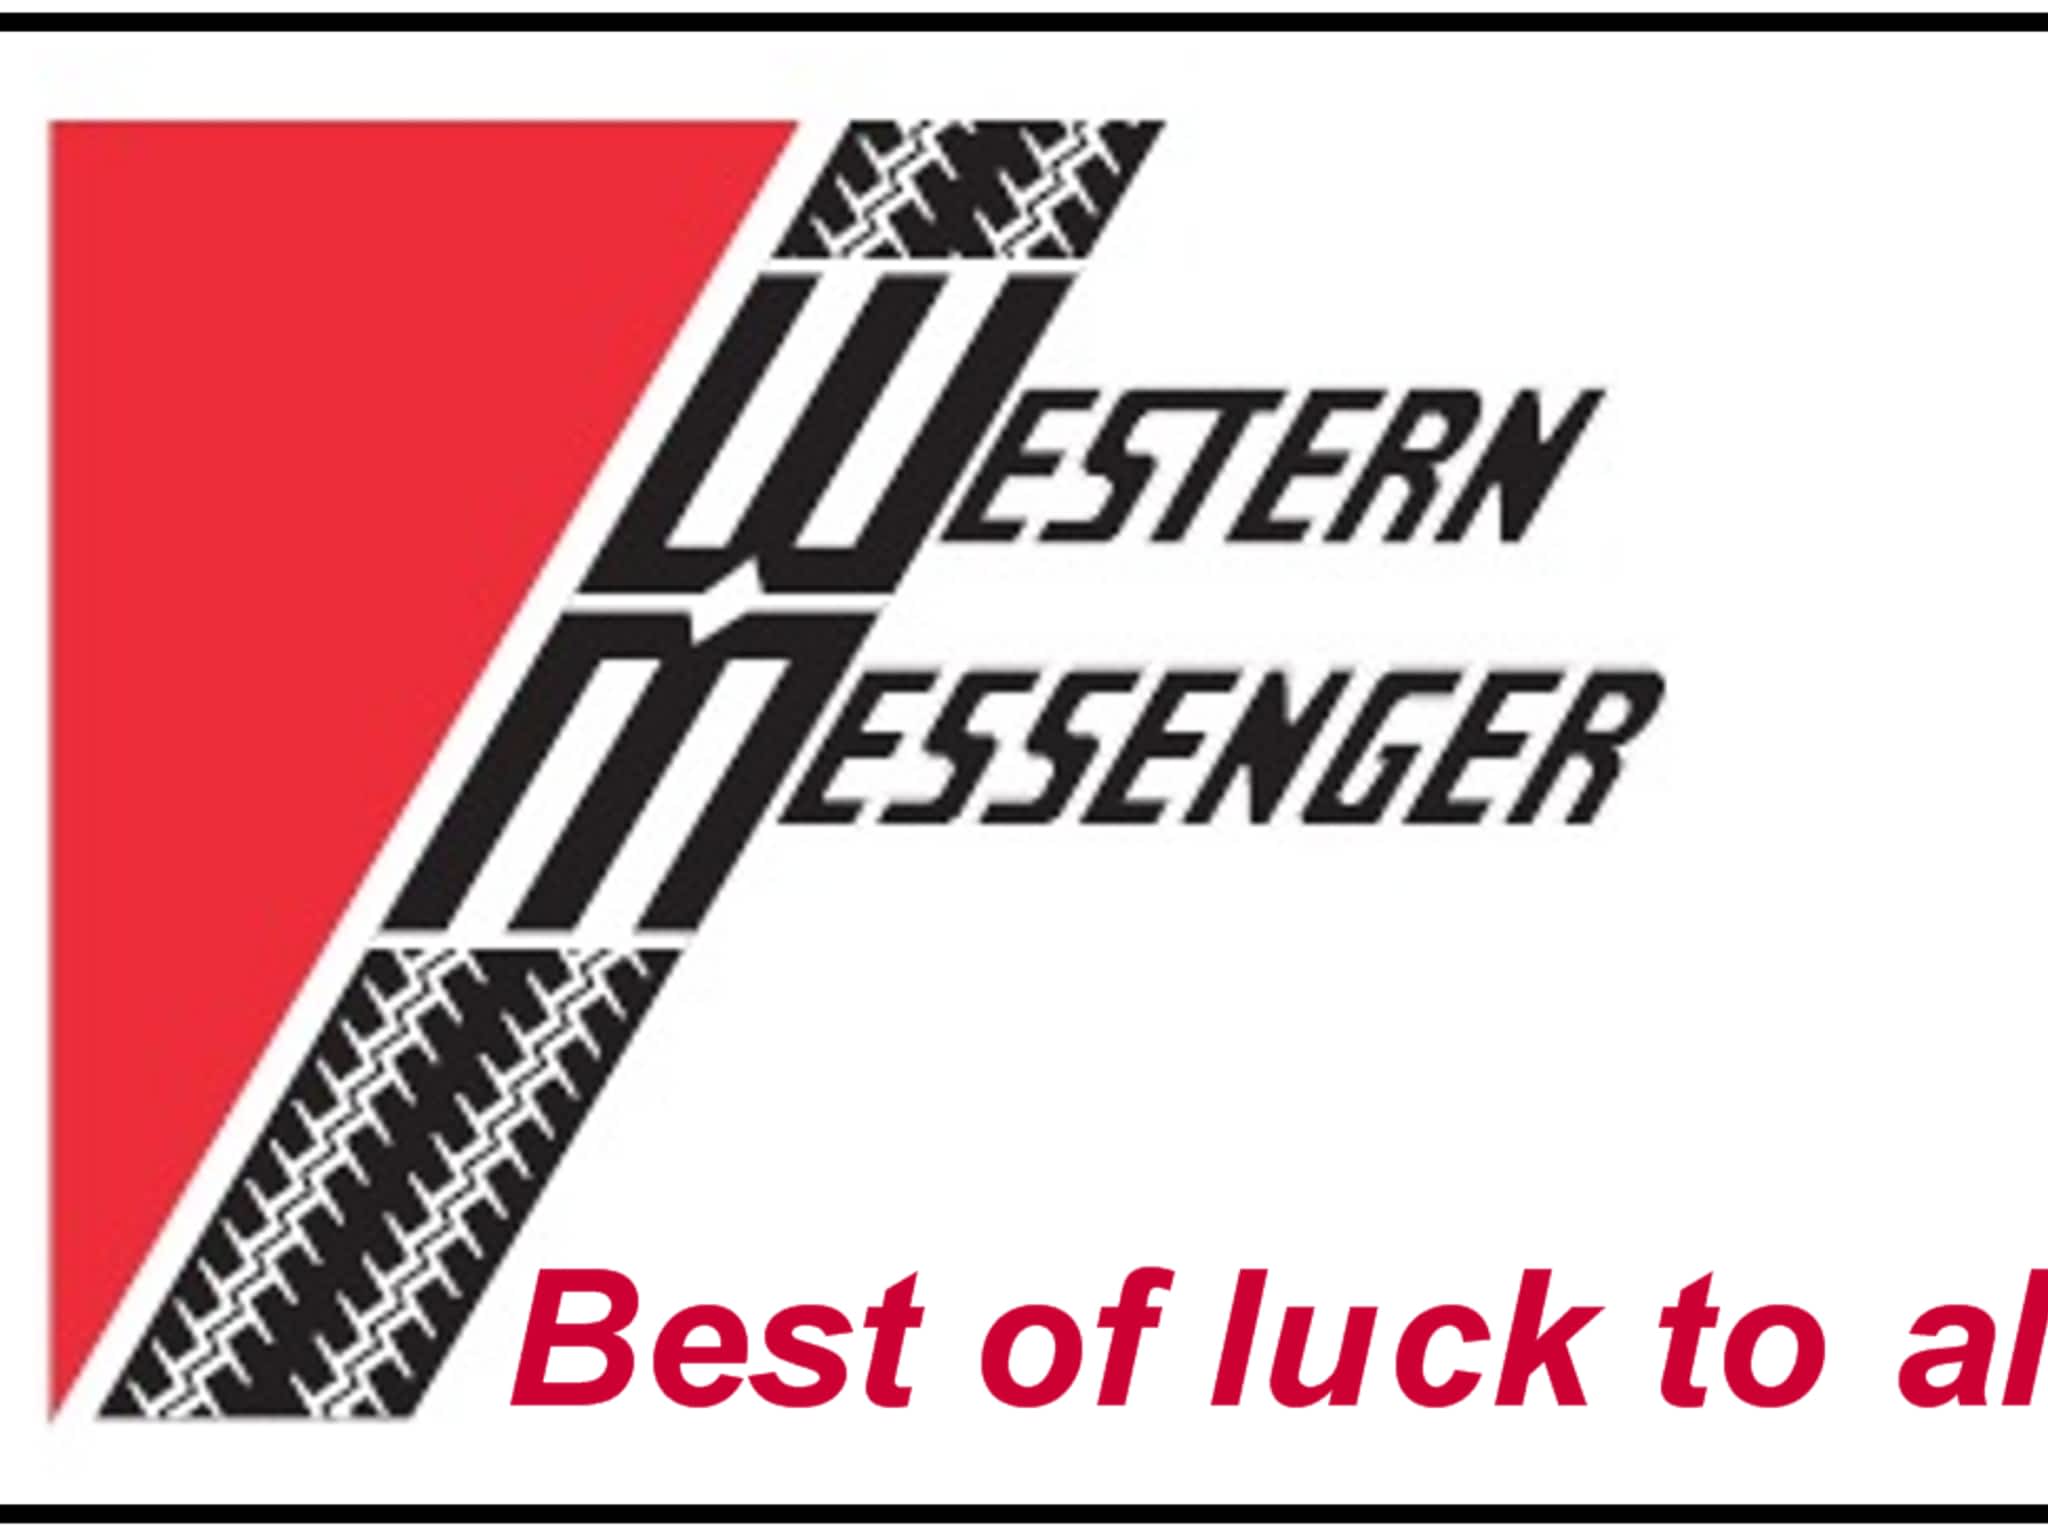 photo Western Messenger & Transfer Ltd